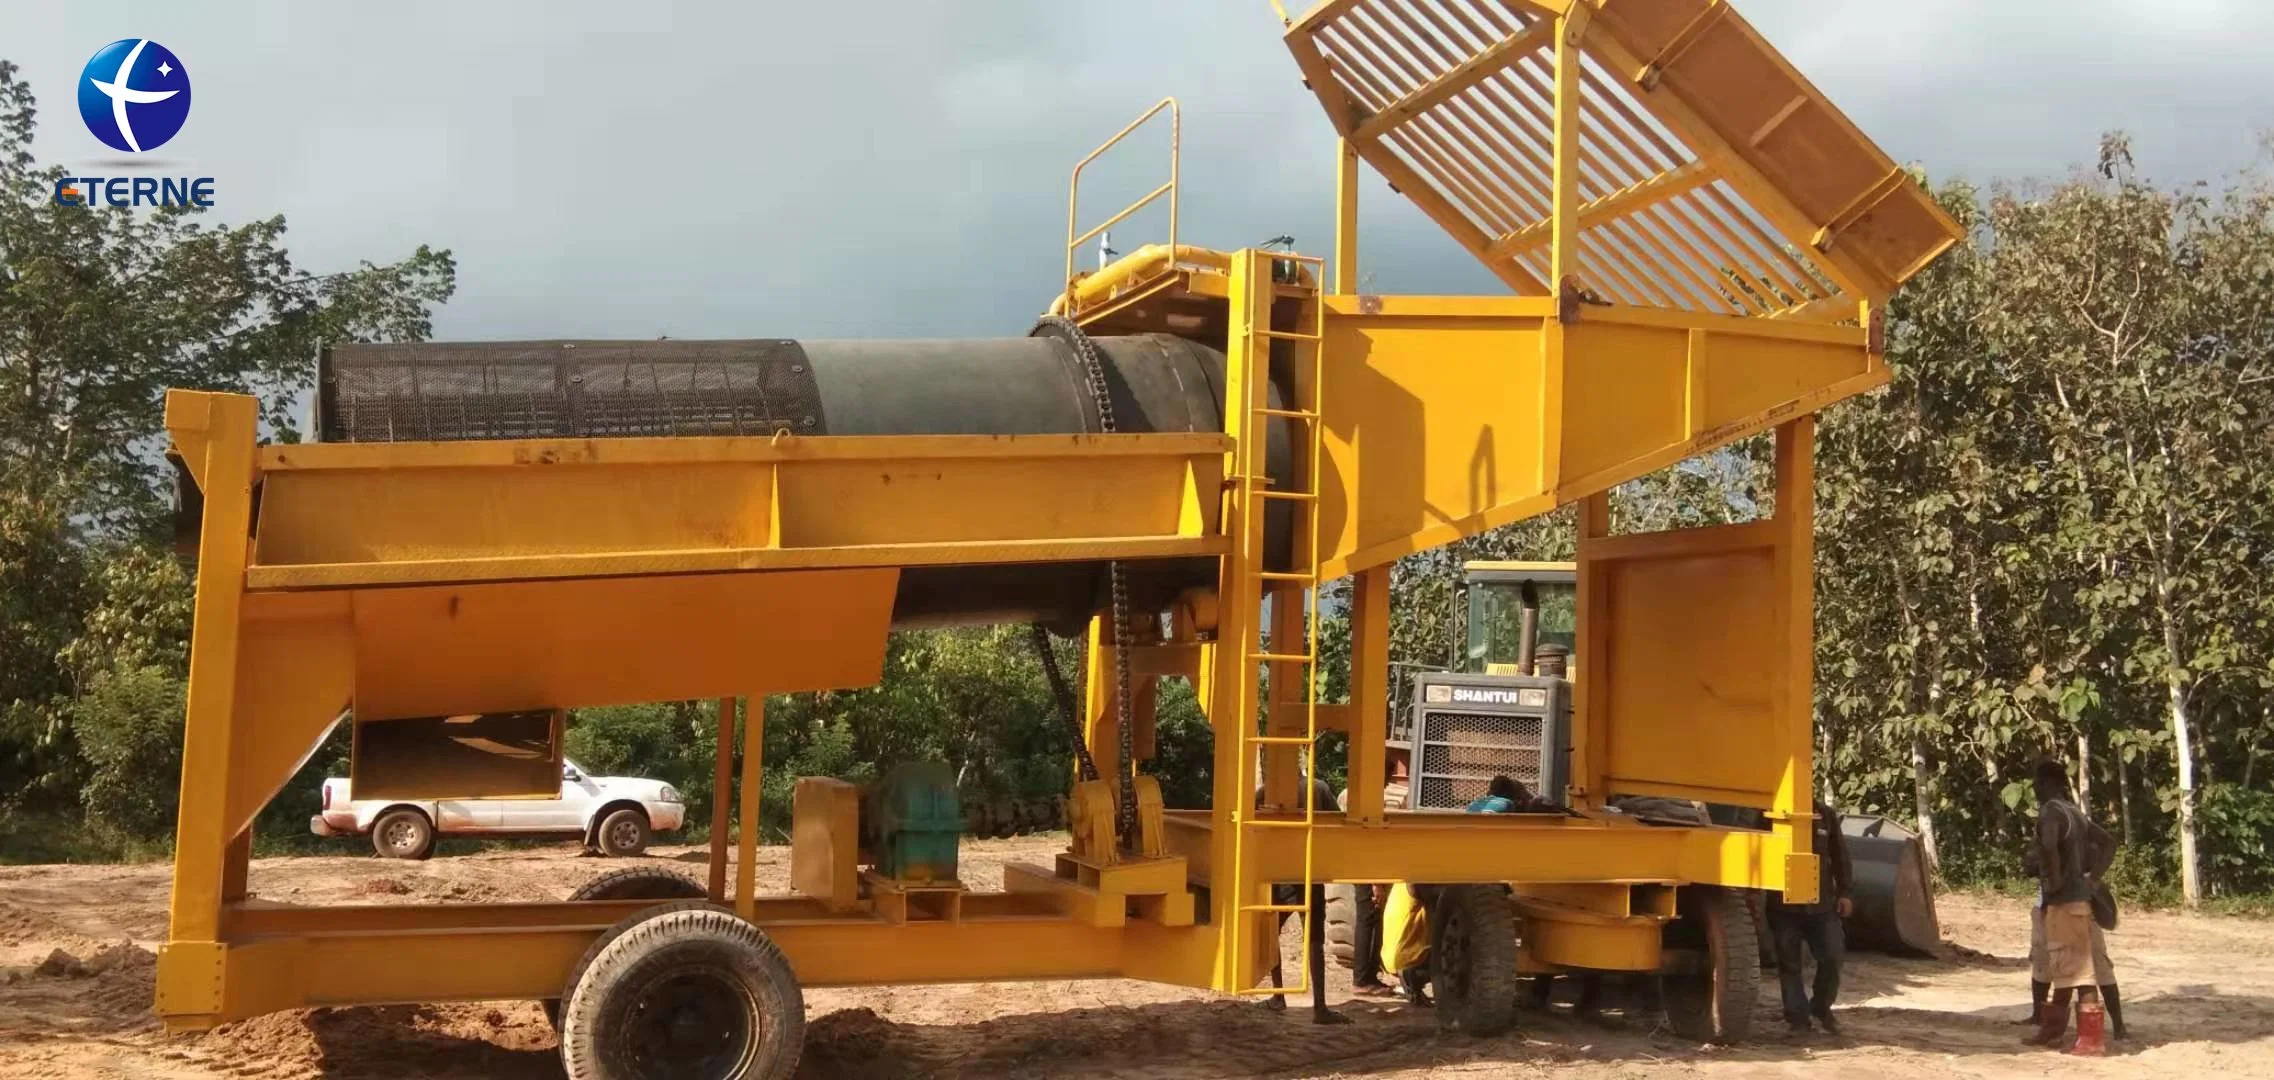 Eterne Gold Mining Mineral Separator/Separation Equipment/Gold Machine